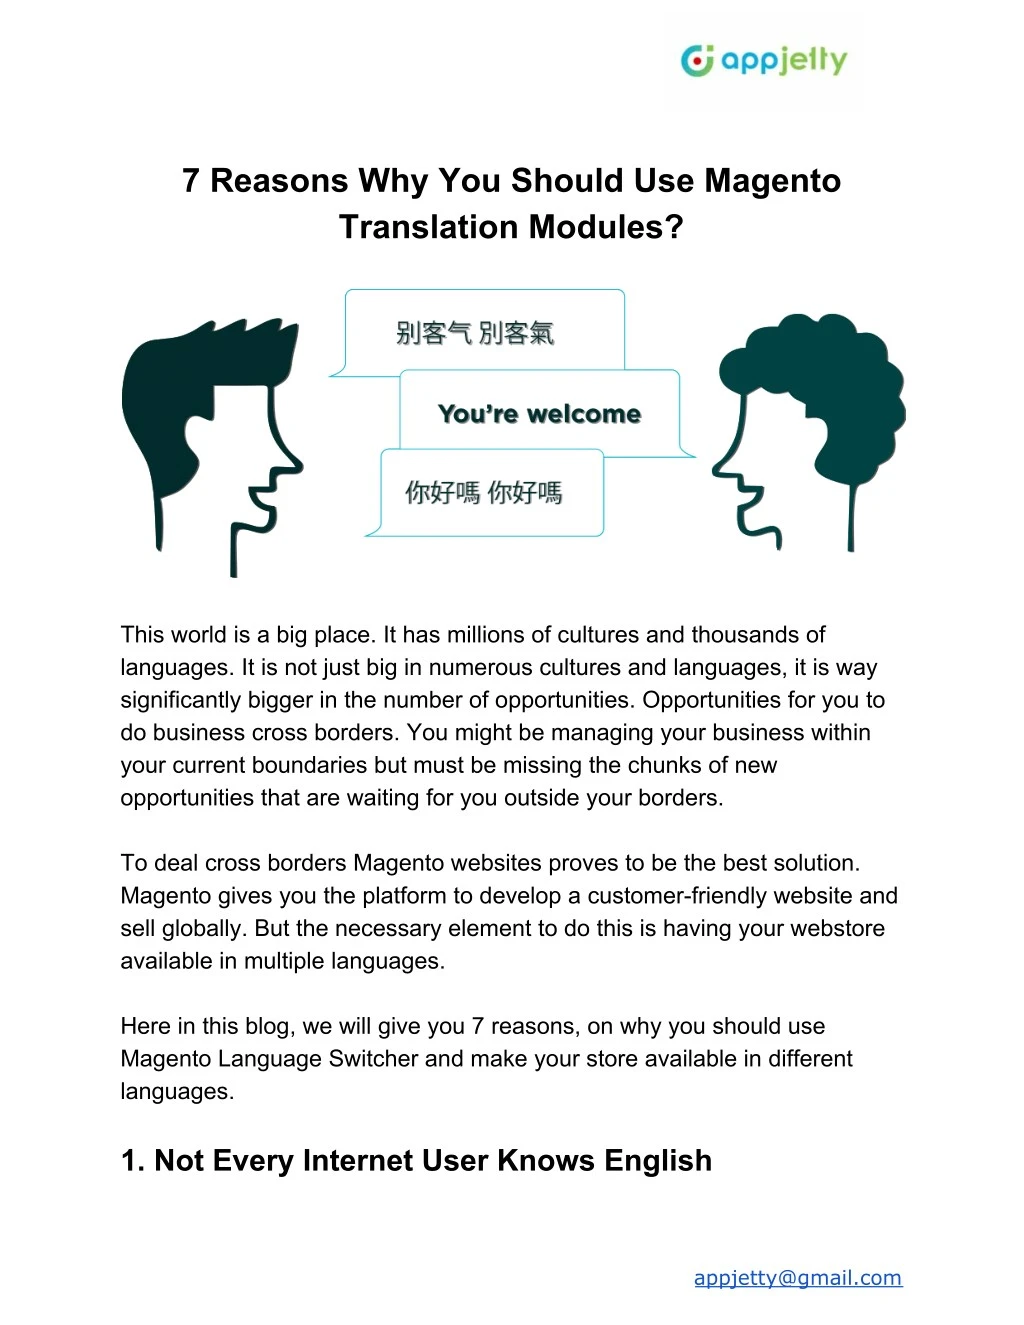 7 reasons why you should use magento translation